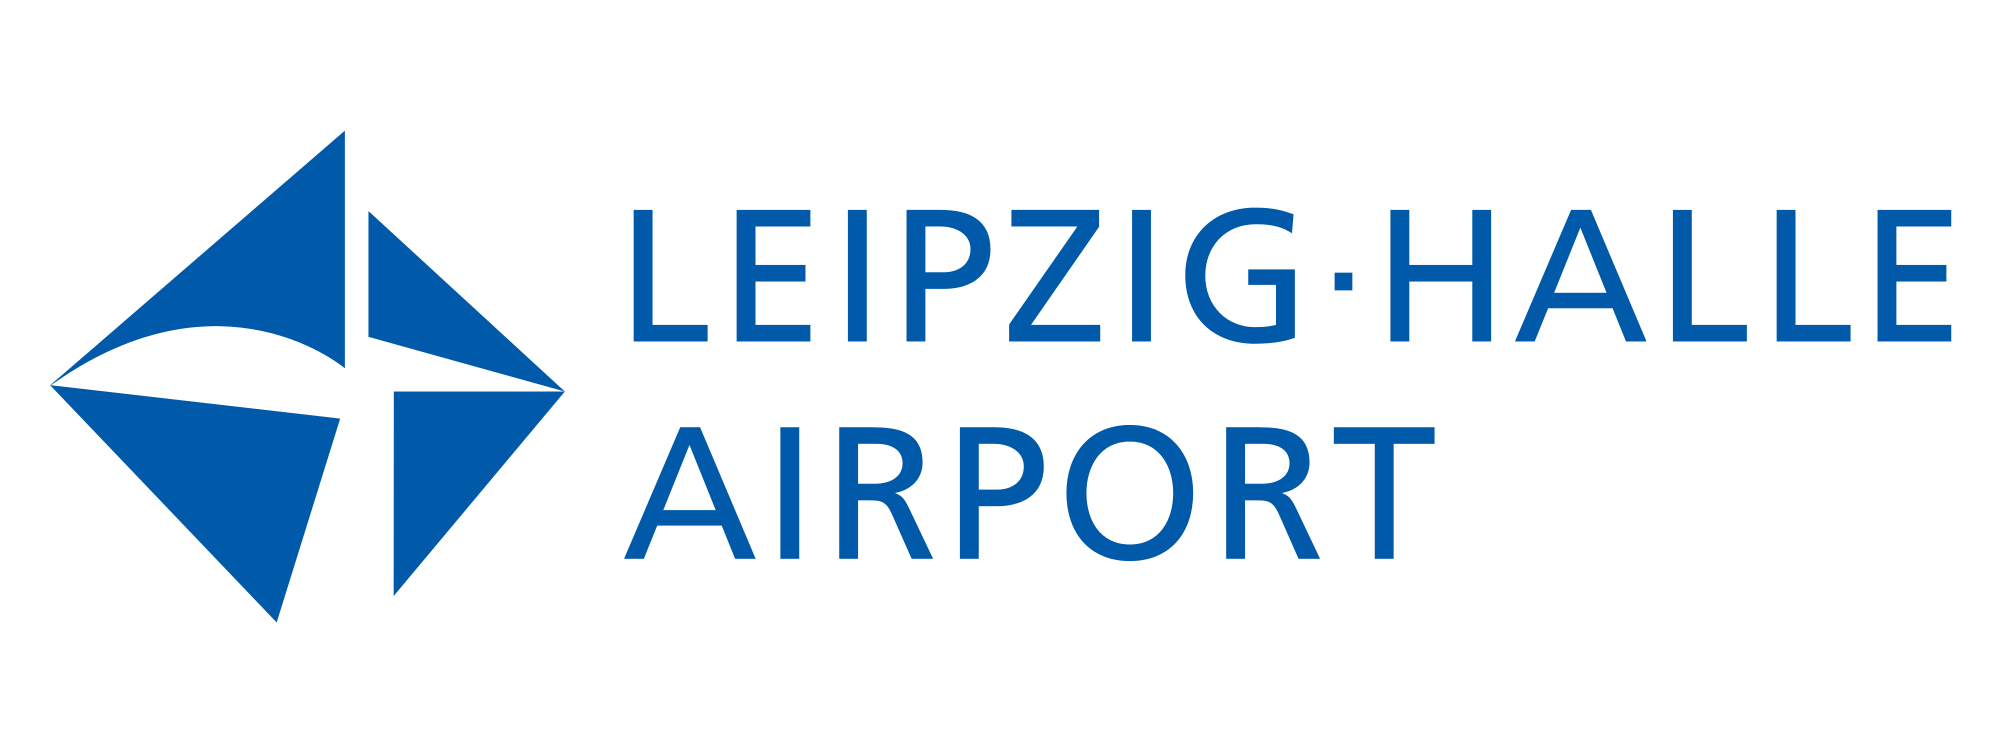 Sân bay Leipzig Halle